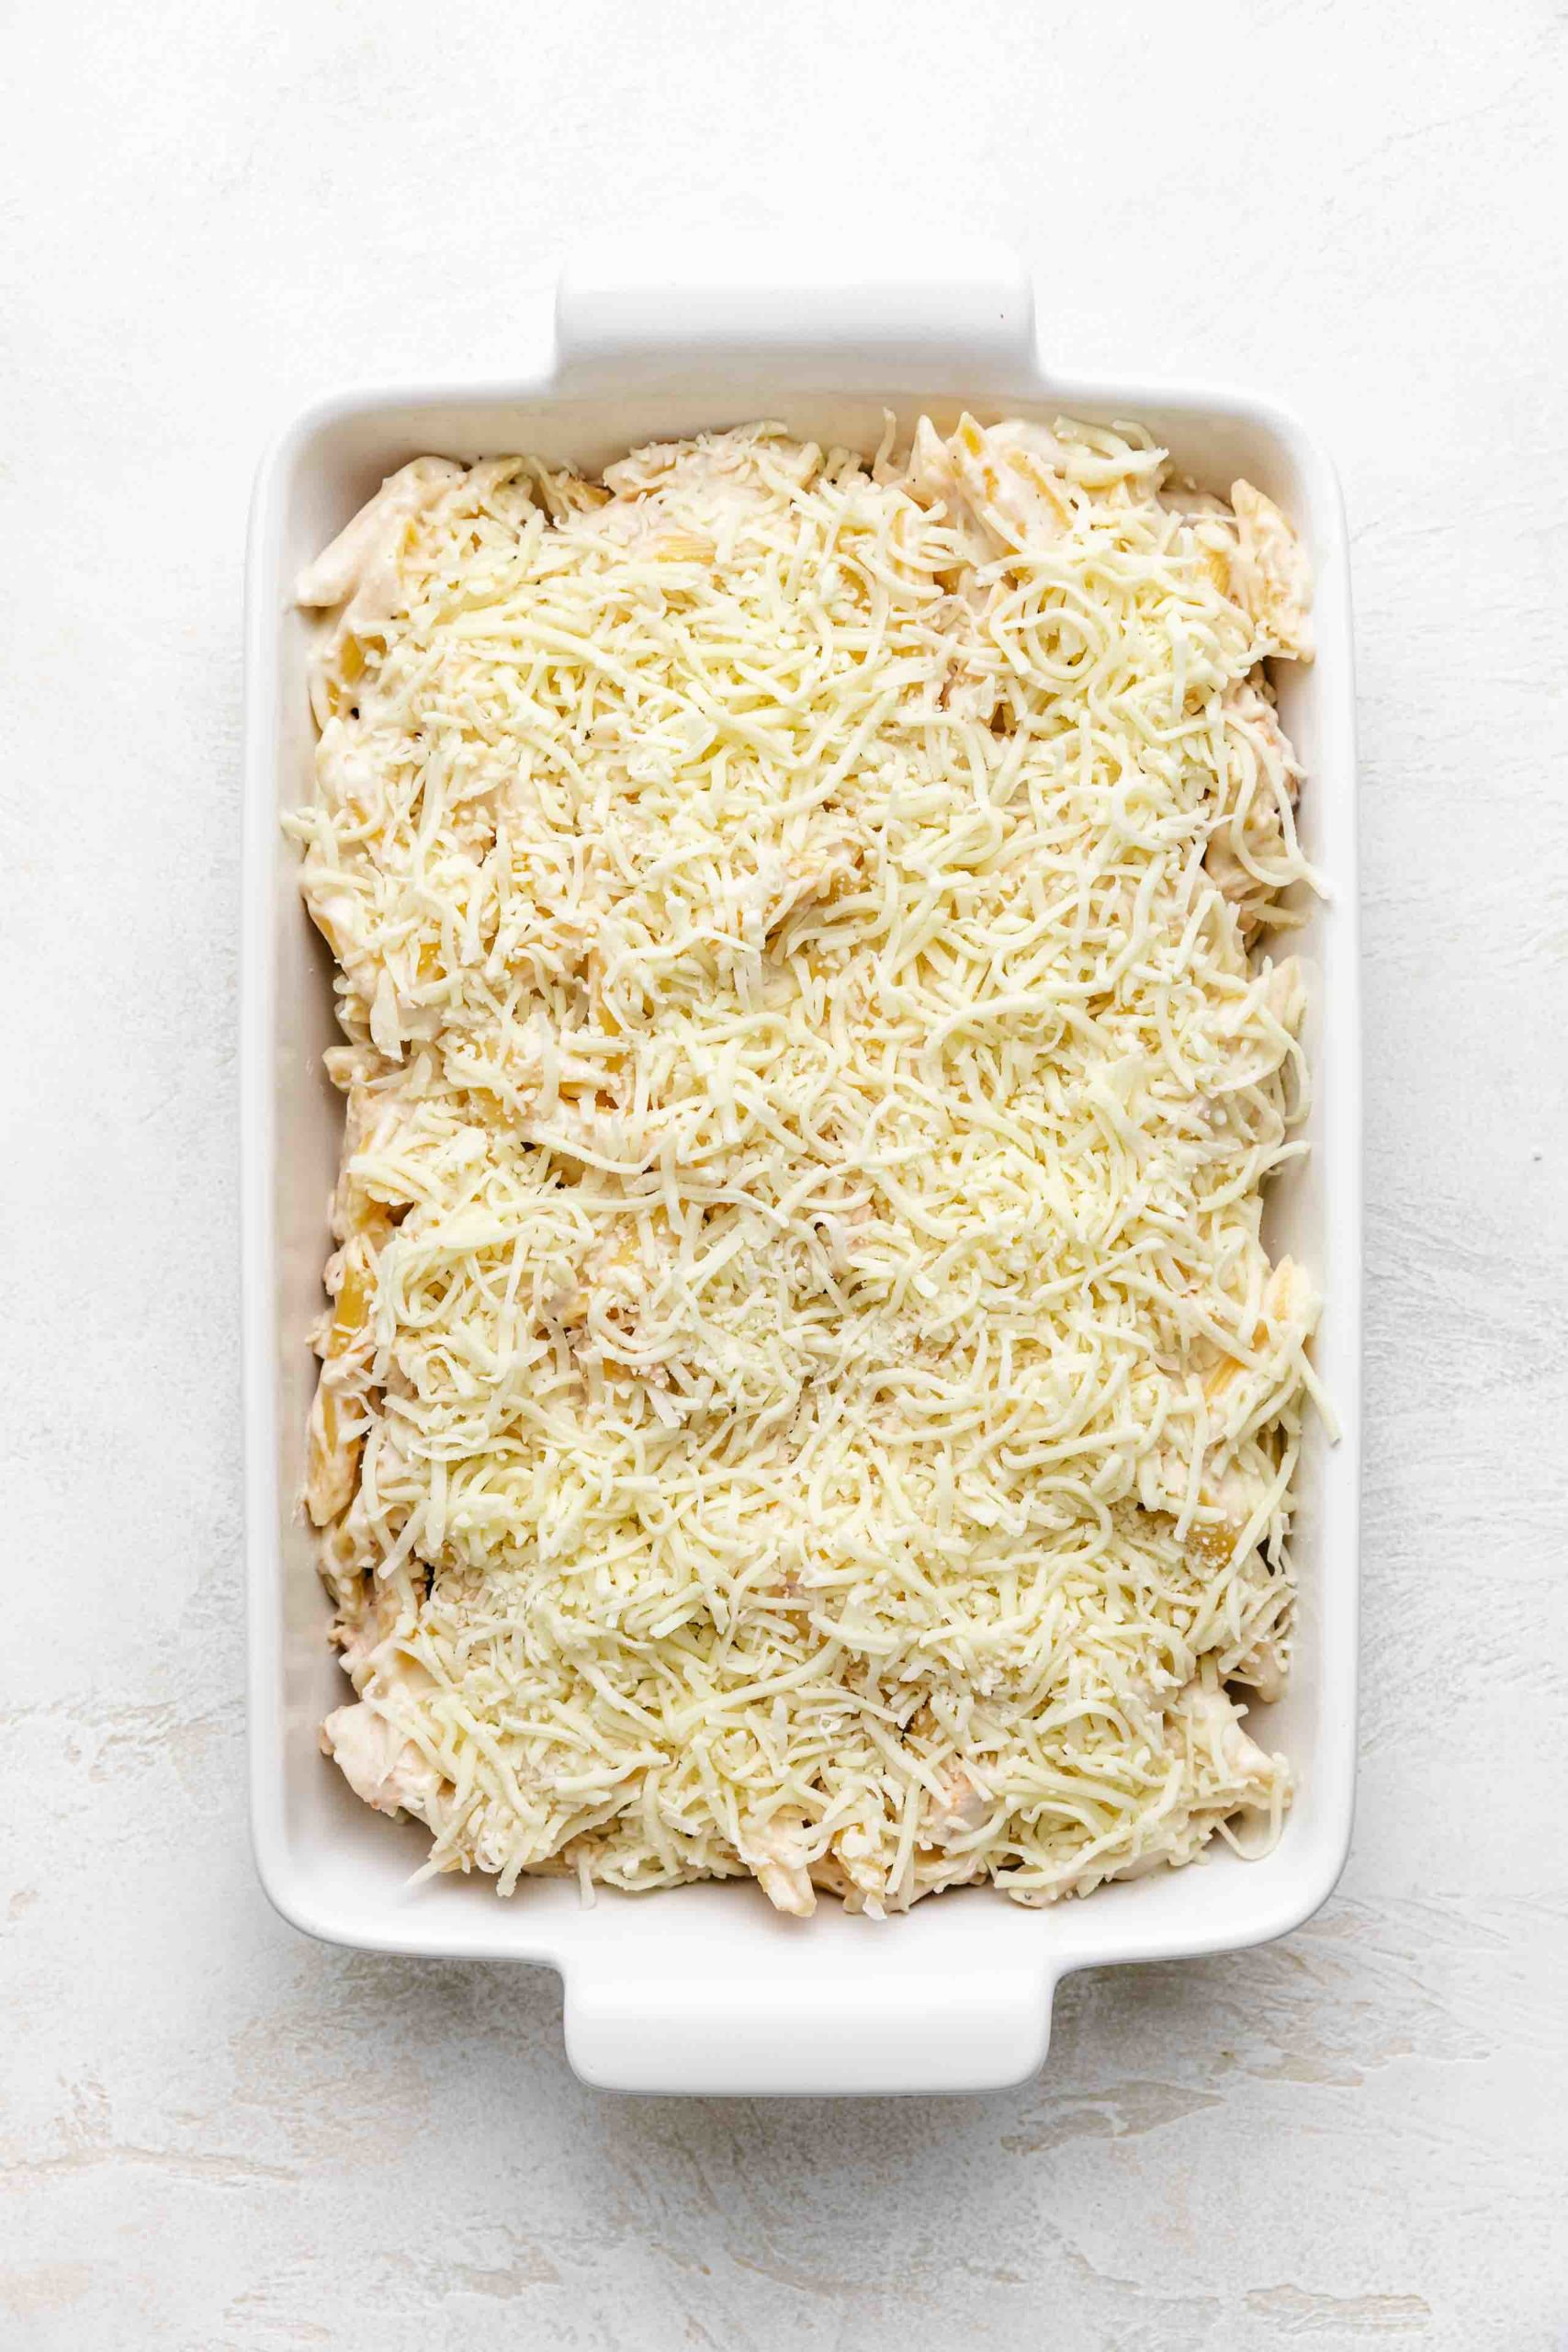 Mozzarella cheese sprinkle over pasta bake.